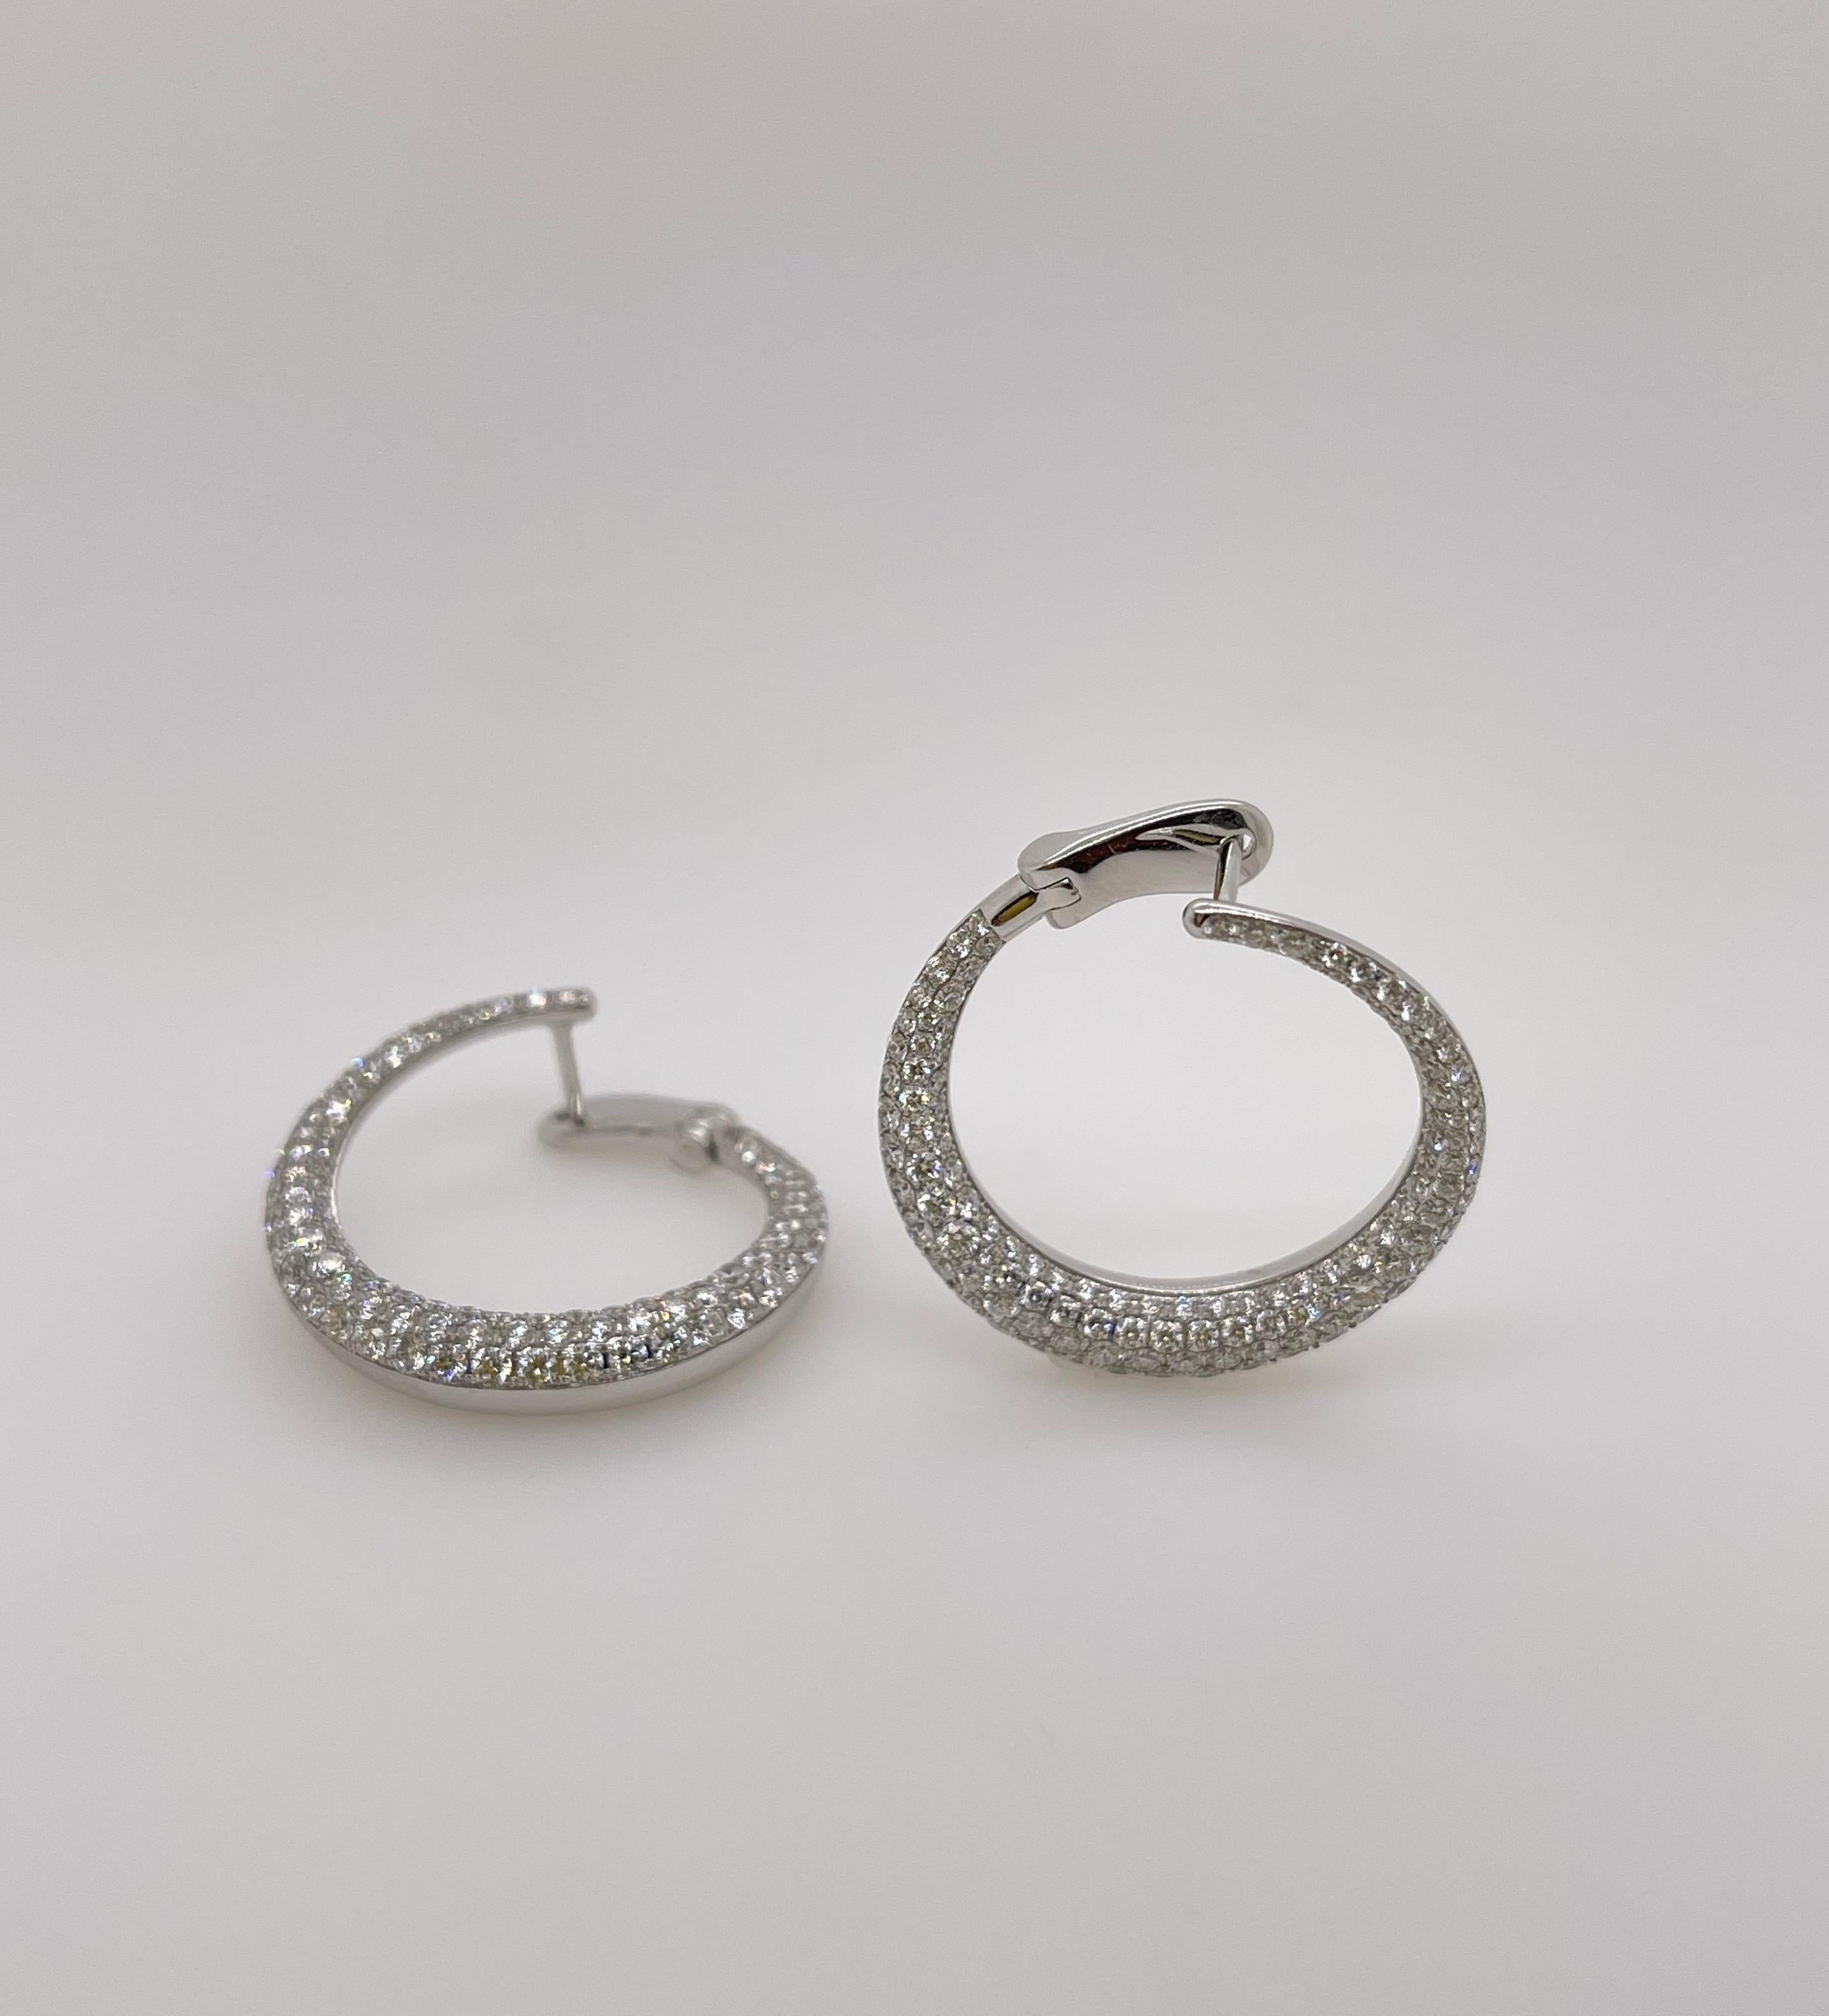 White Gold Pavé Diamond Forward Facing Circular Earrings
18kt white gold 
236 round brilliant diamonds= 2.29ct
